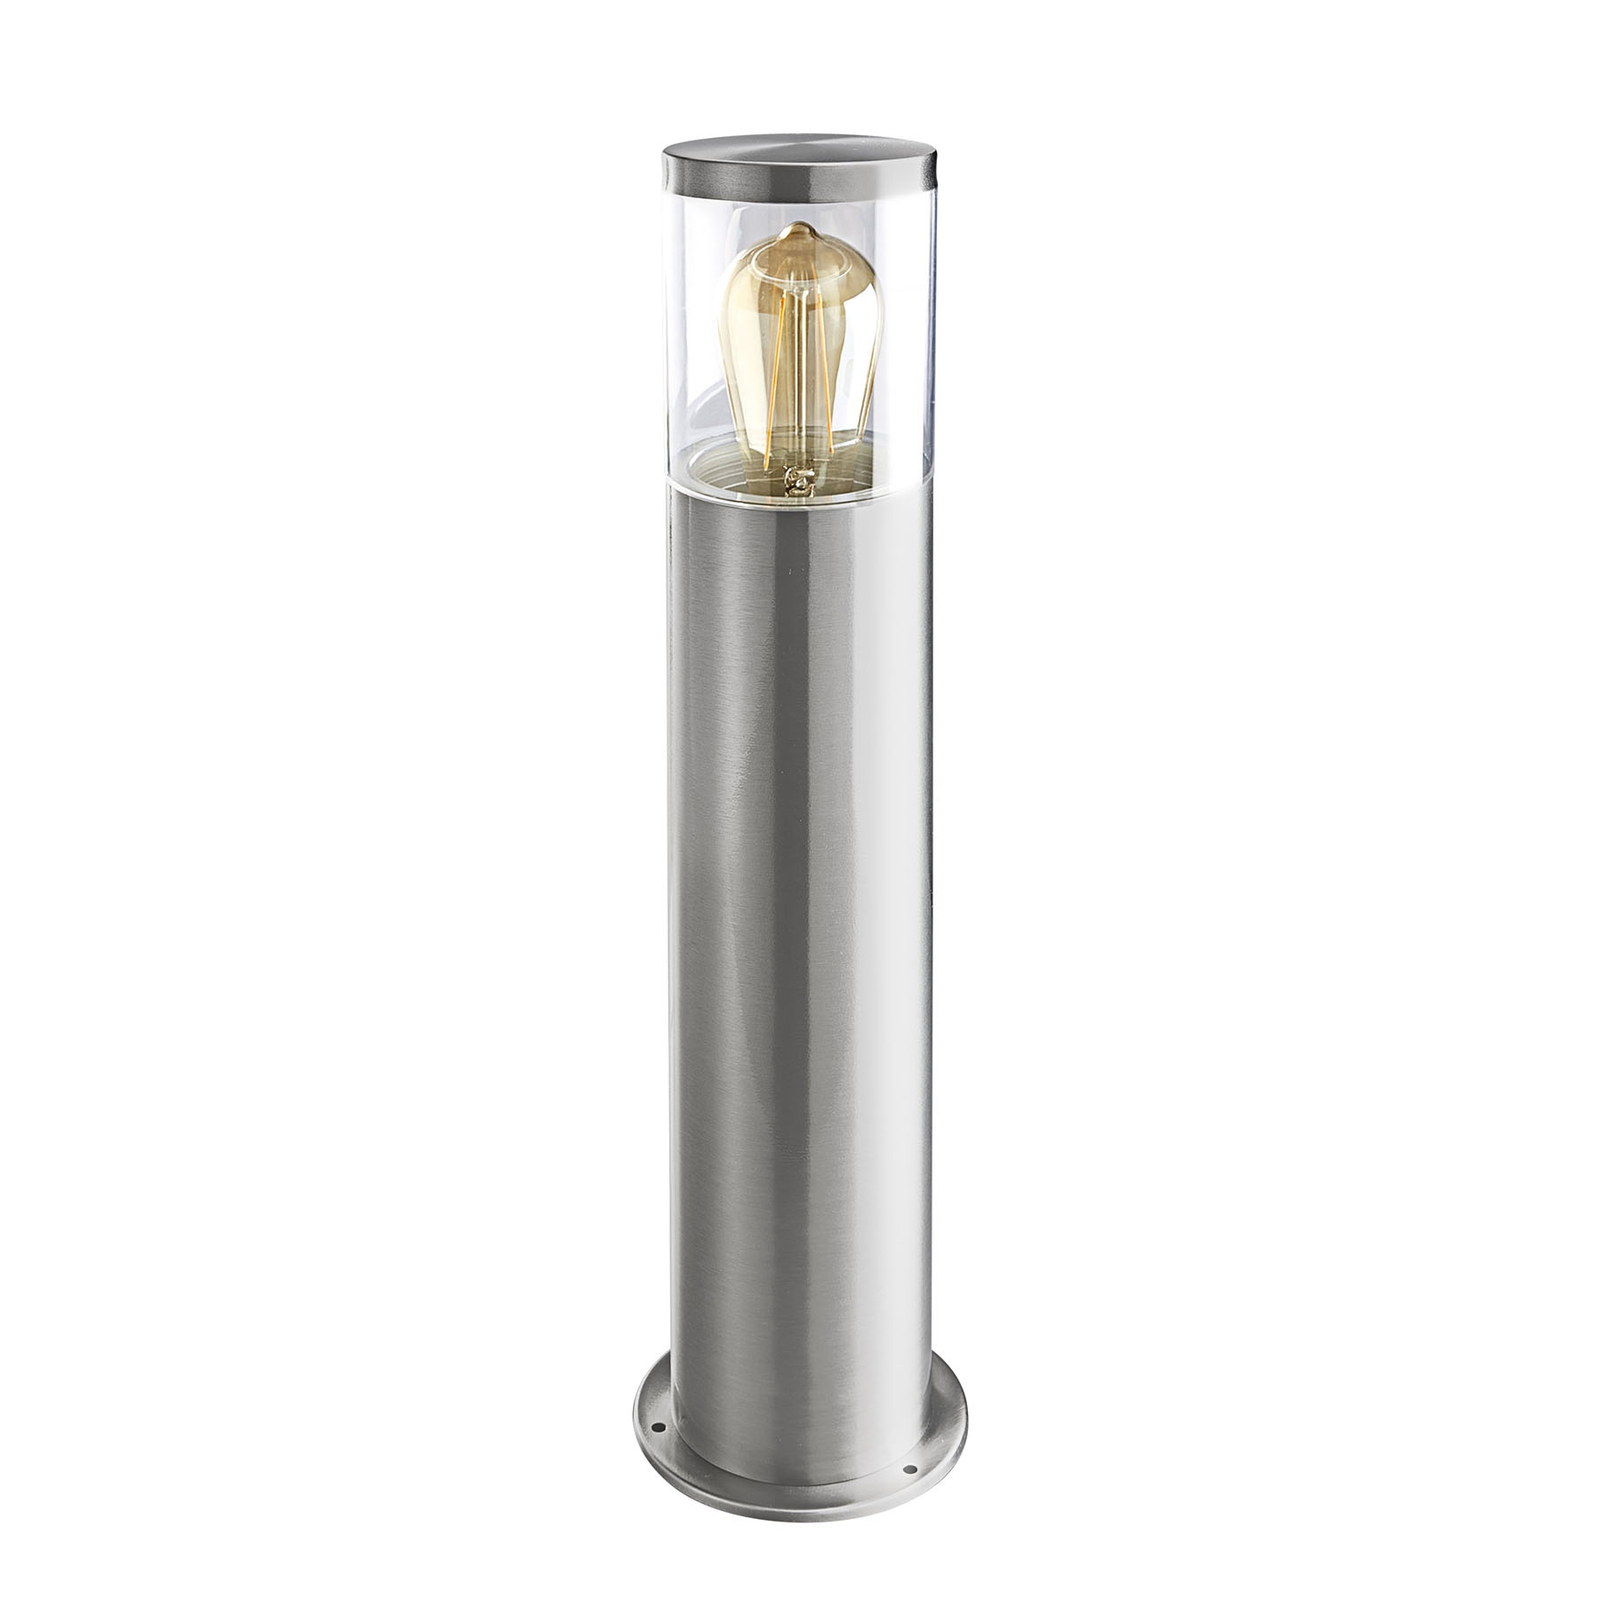 Naxos stainless steel pillar light